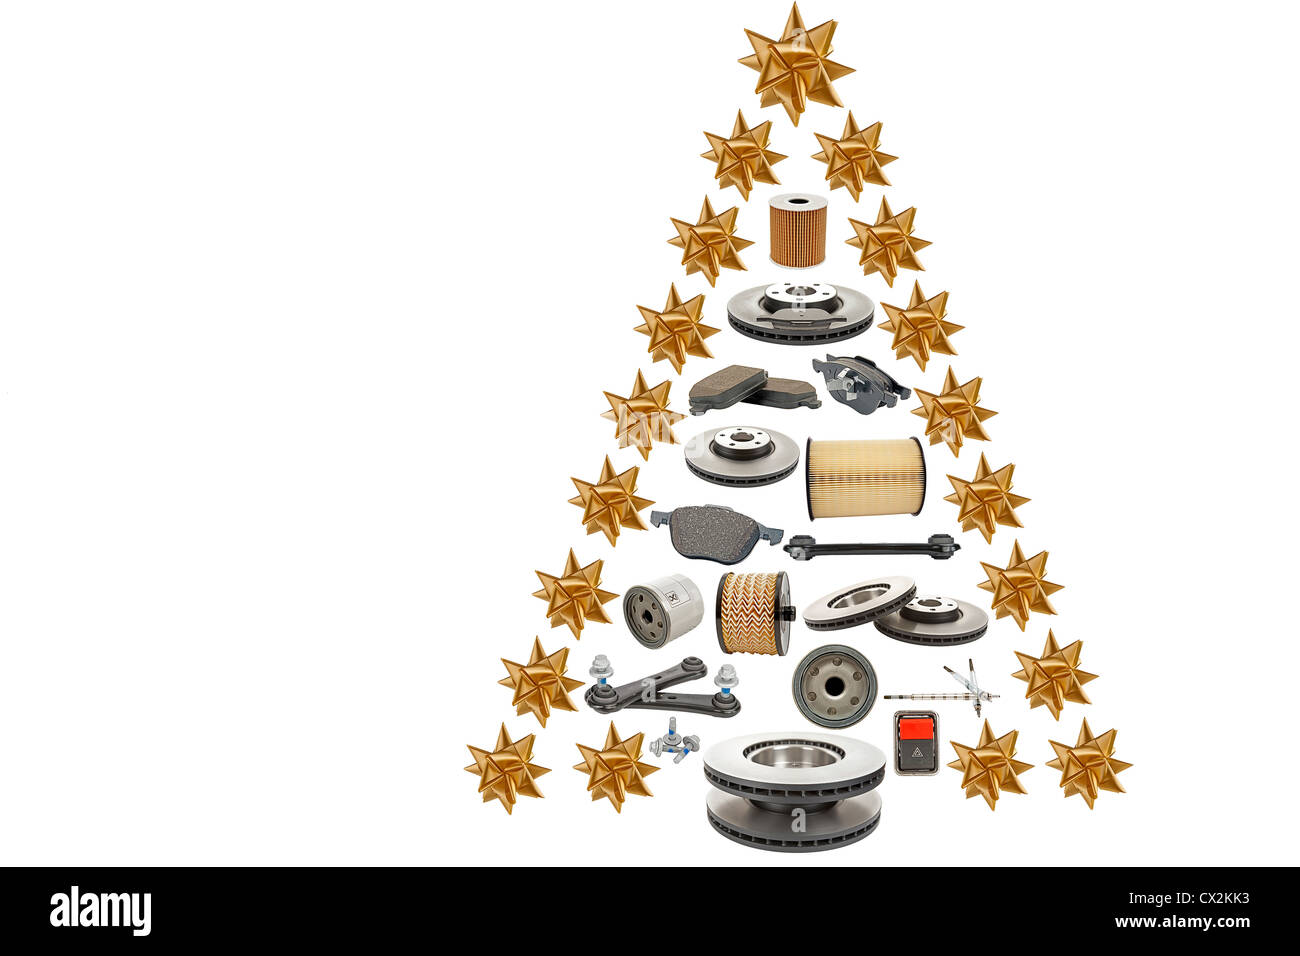 Christmas tree for automotive Stock Photo